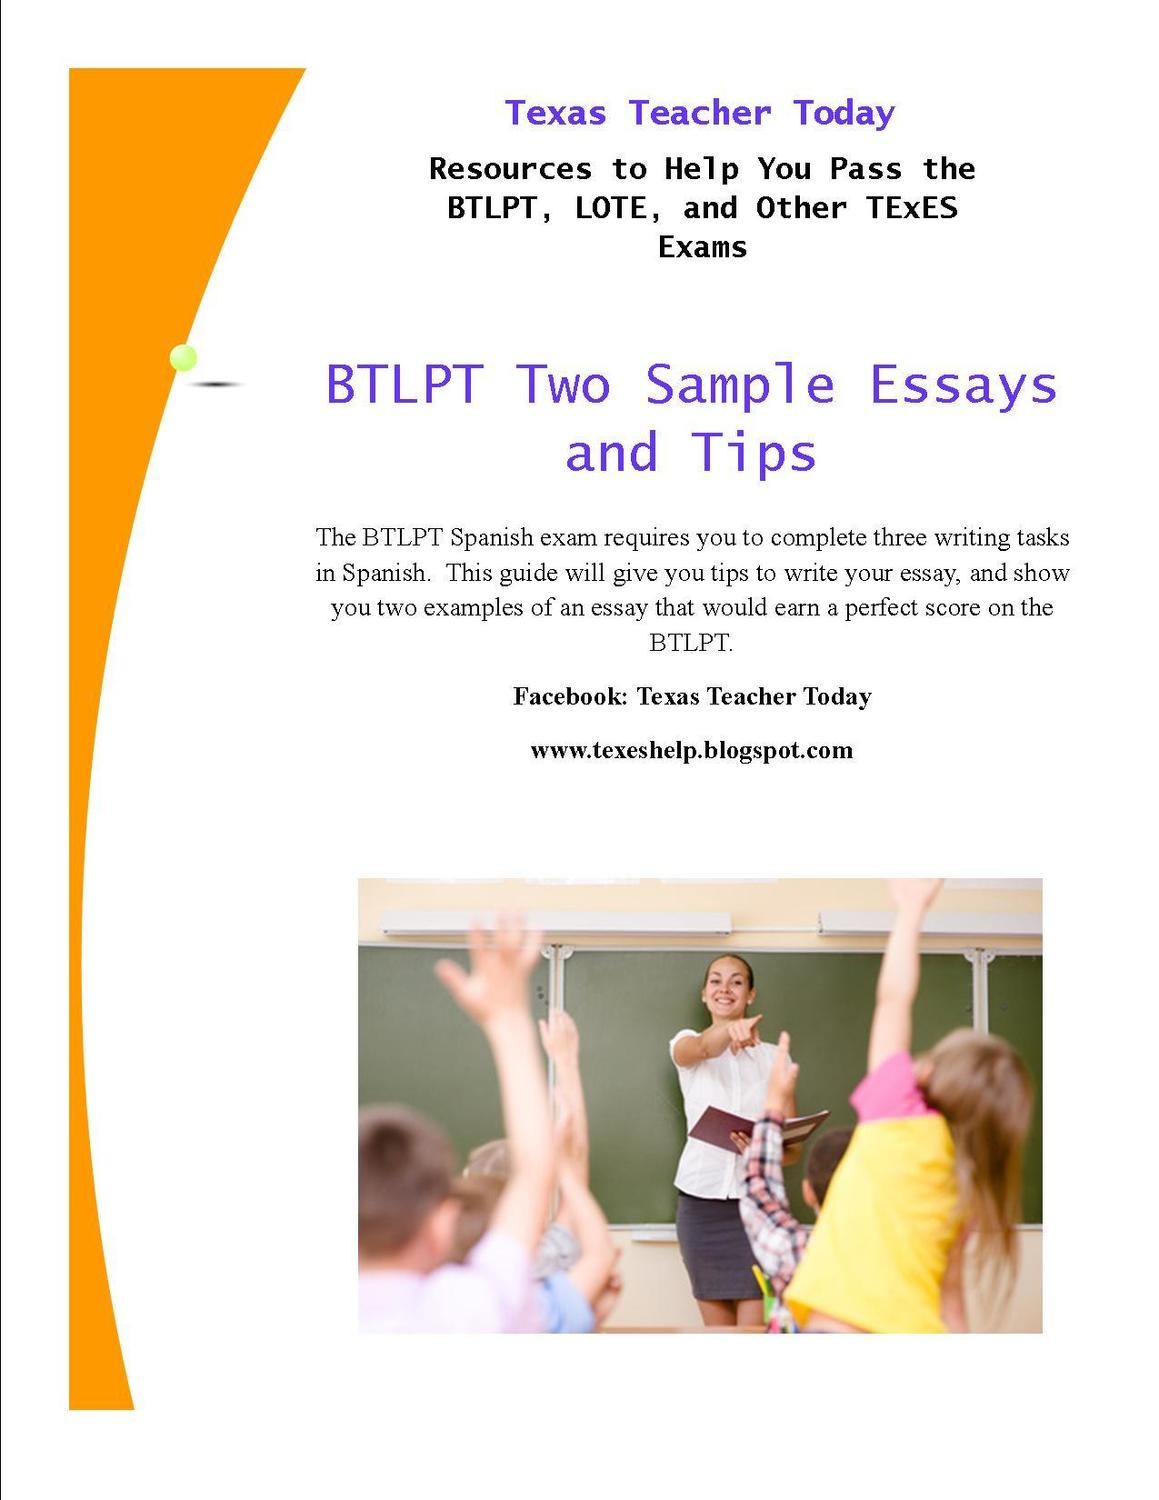 BTLPT 2 Example Essays and Tips